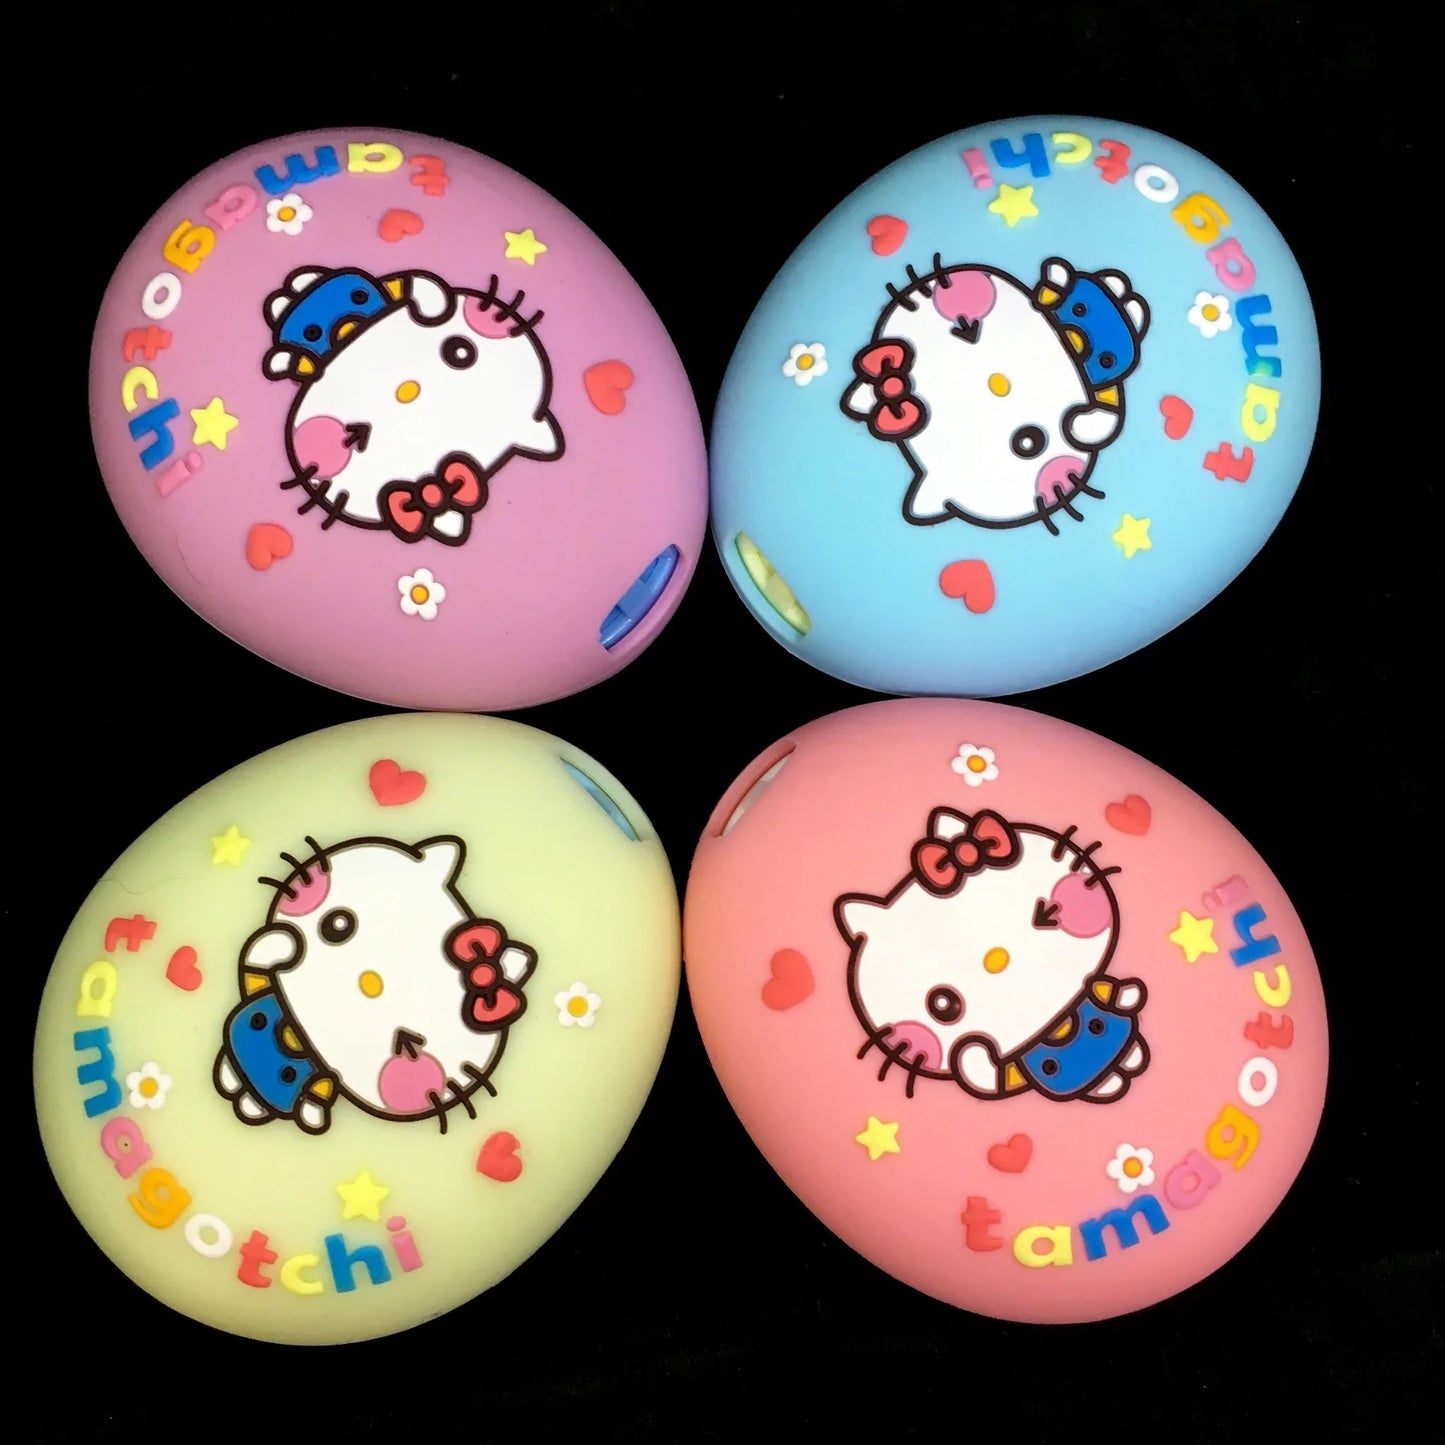 Tamagotchi M!X Hello Kitty Silicone Cover Fuzzy N Chic